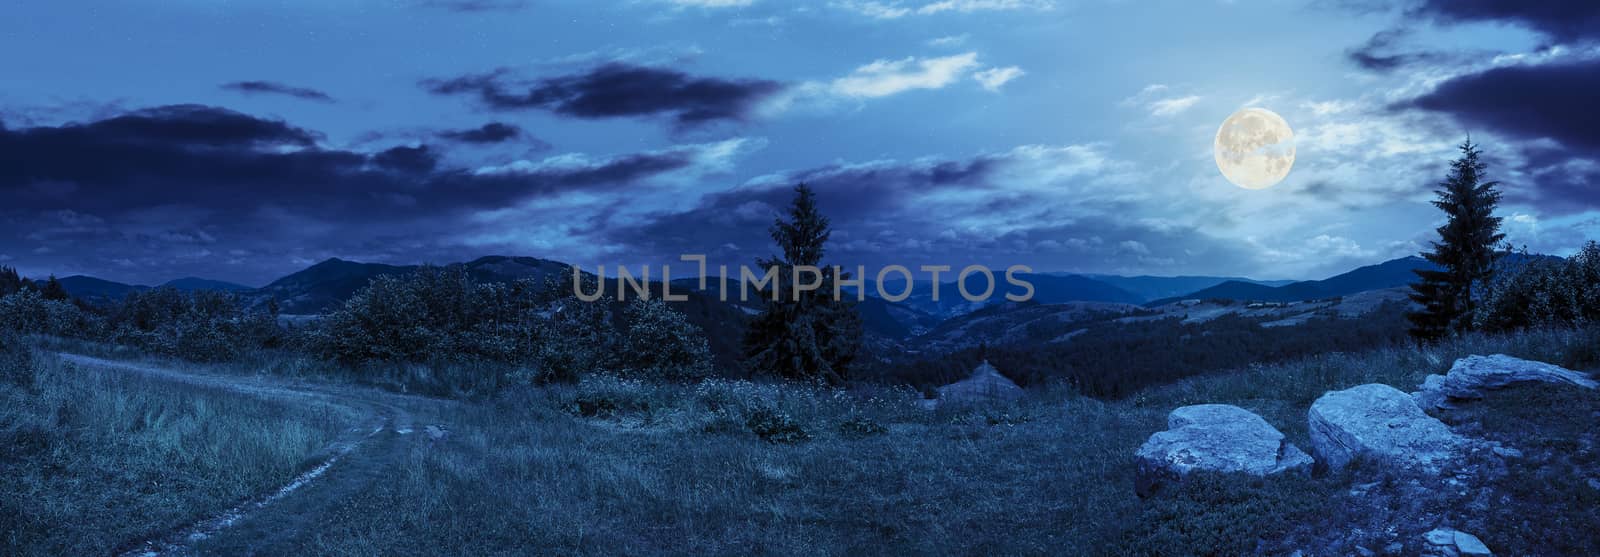 boulders on hillside meadow in mountain at night by Pellinni